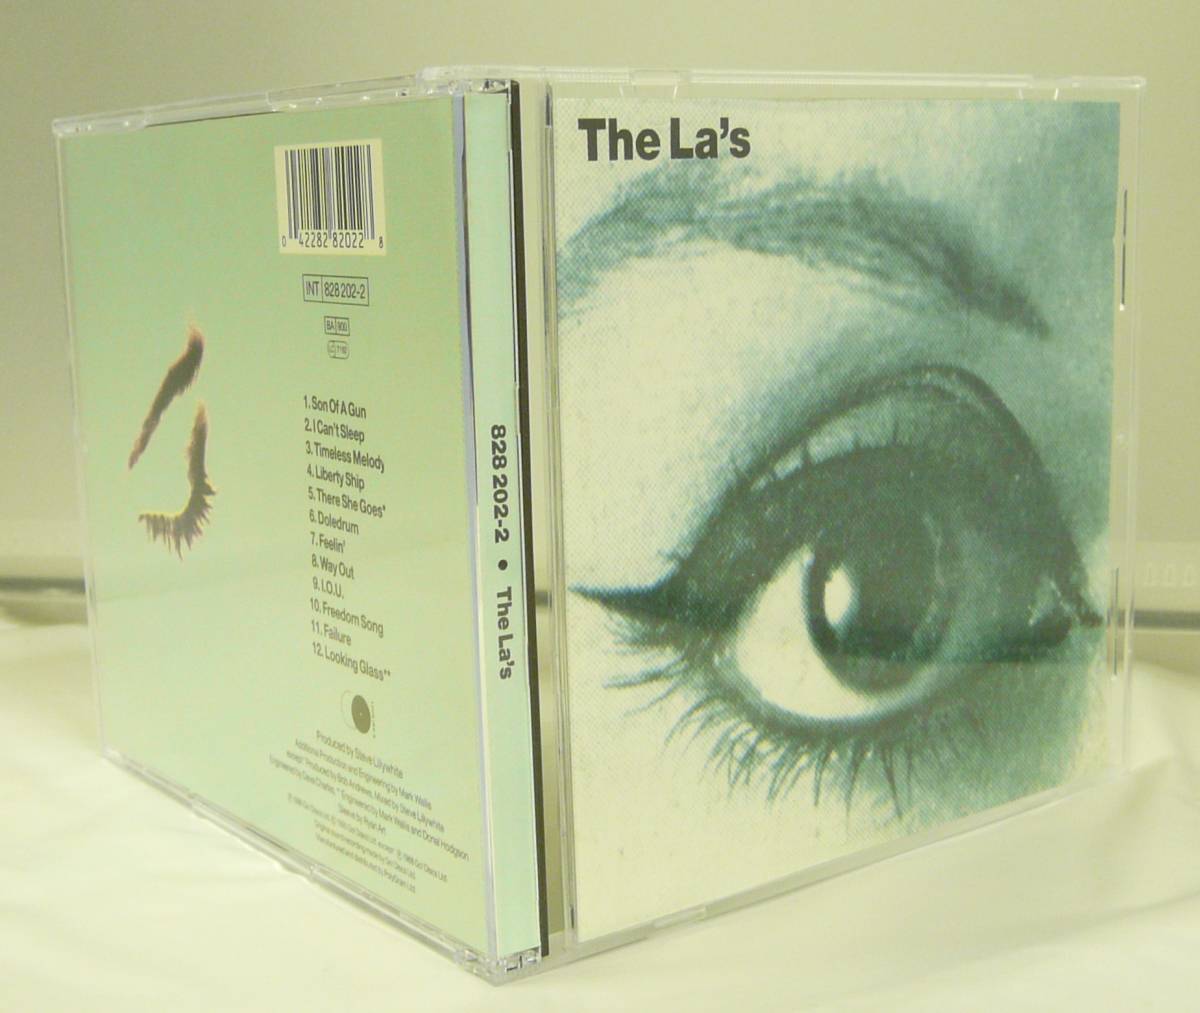 CD♪USED◎　The La's -ザ・ラーズ-　◆ The La's ◆ ◎管理CD1427_画像4